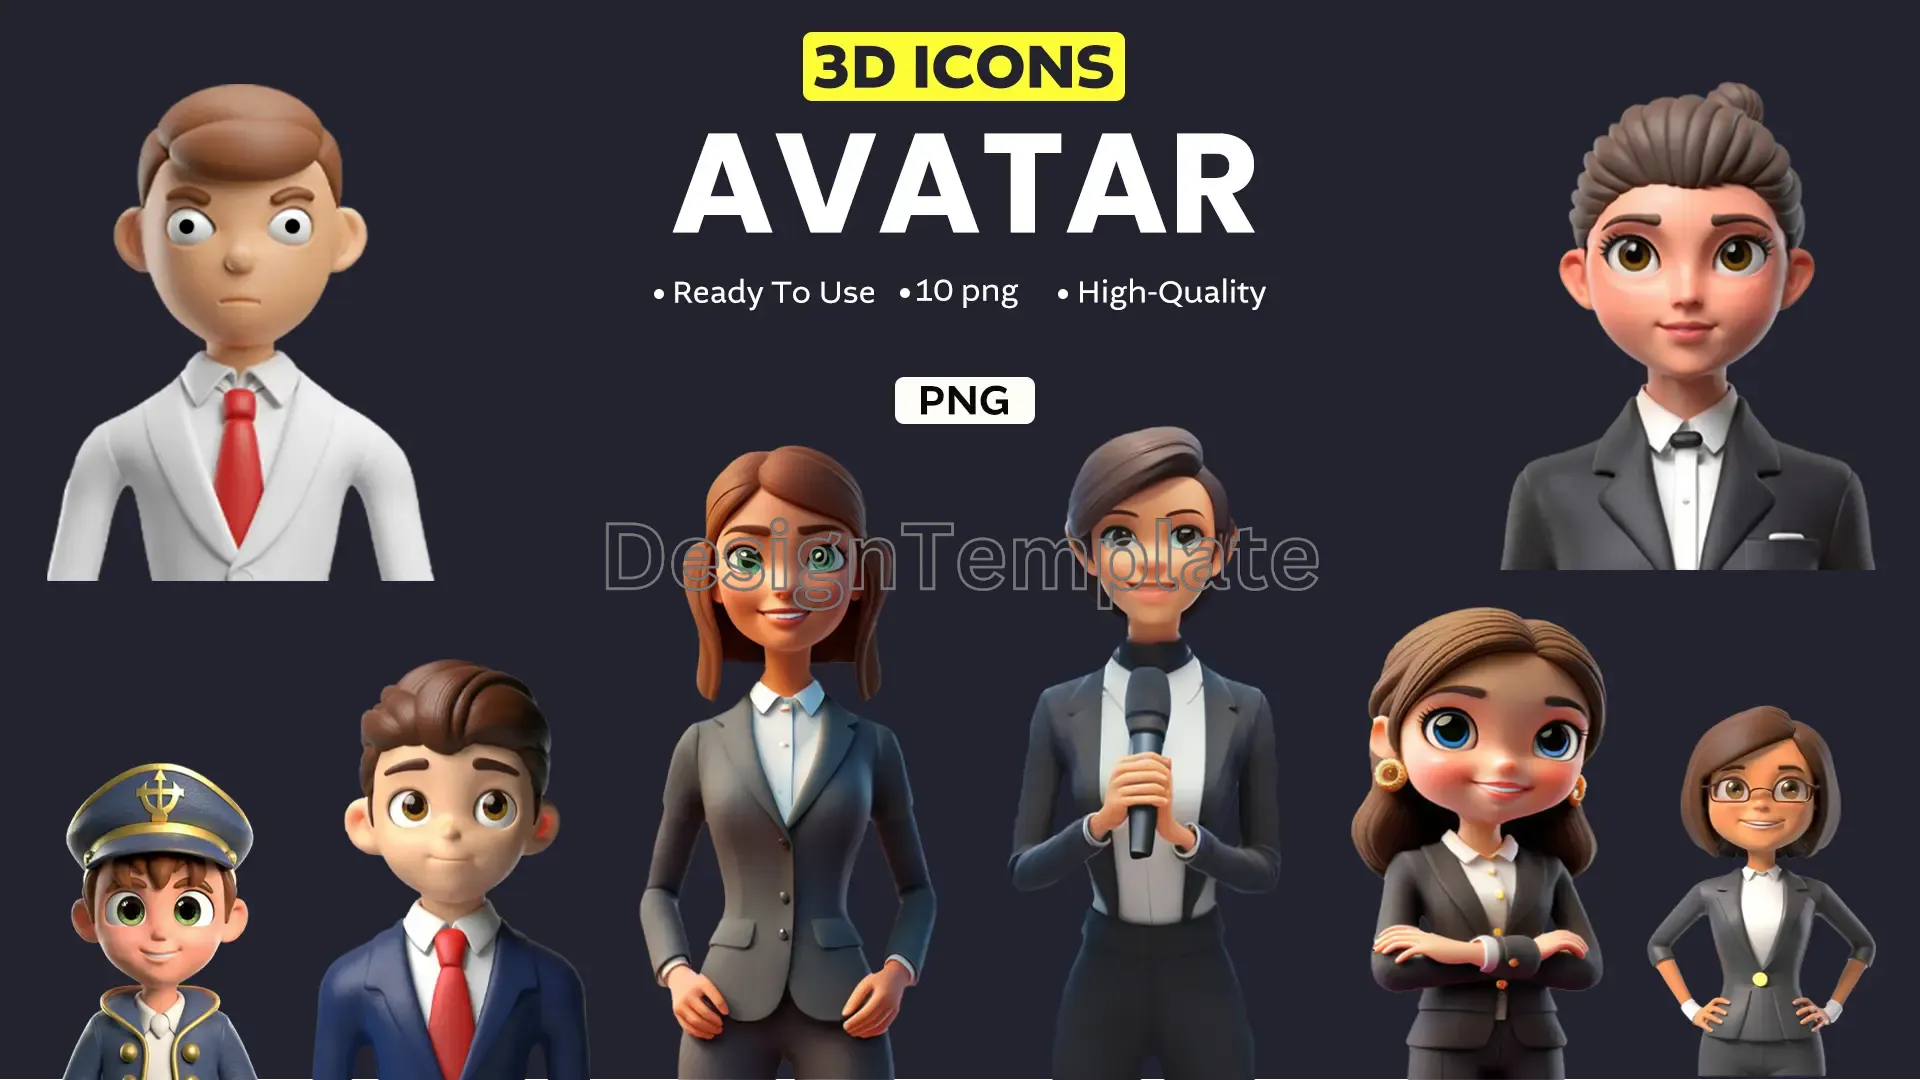 Ready to Use 3D Avatar Design Bundle image